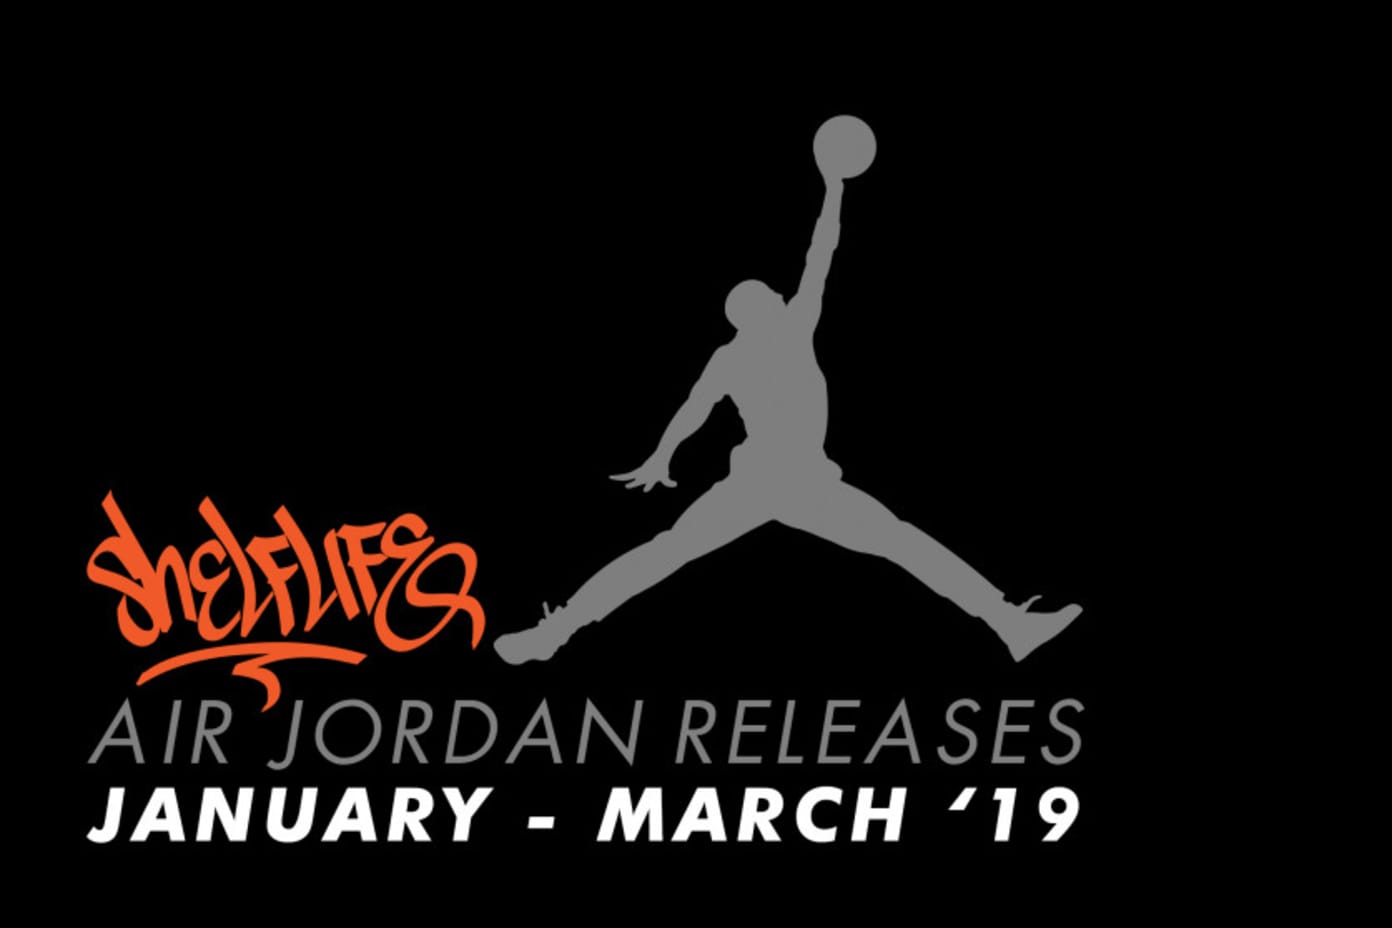 Nike Air Jordan Release Dates January - March 2019